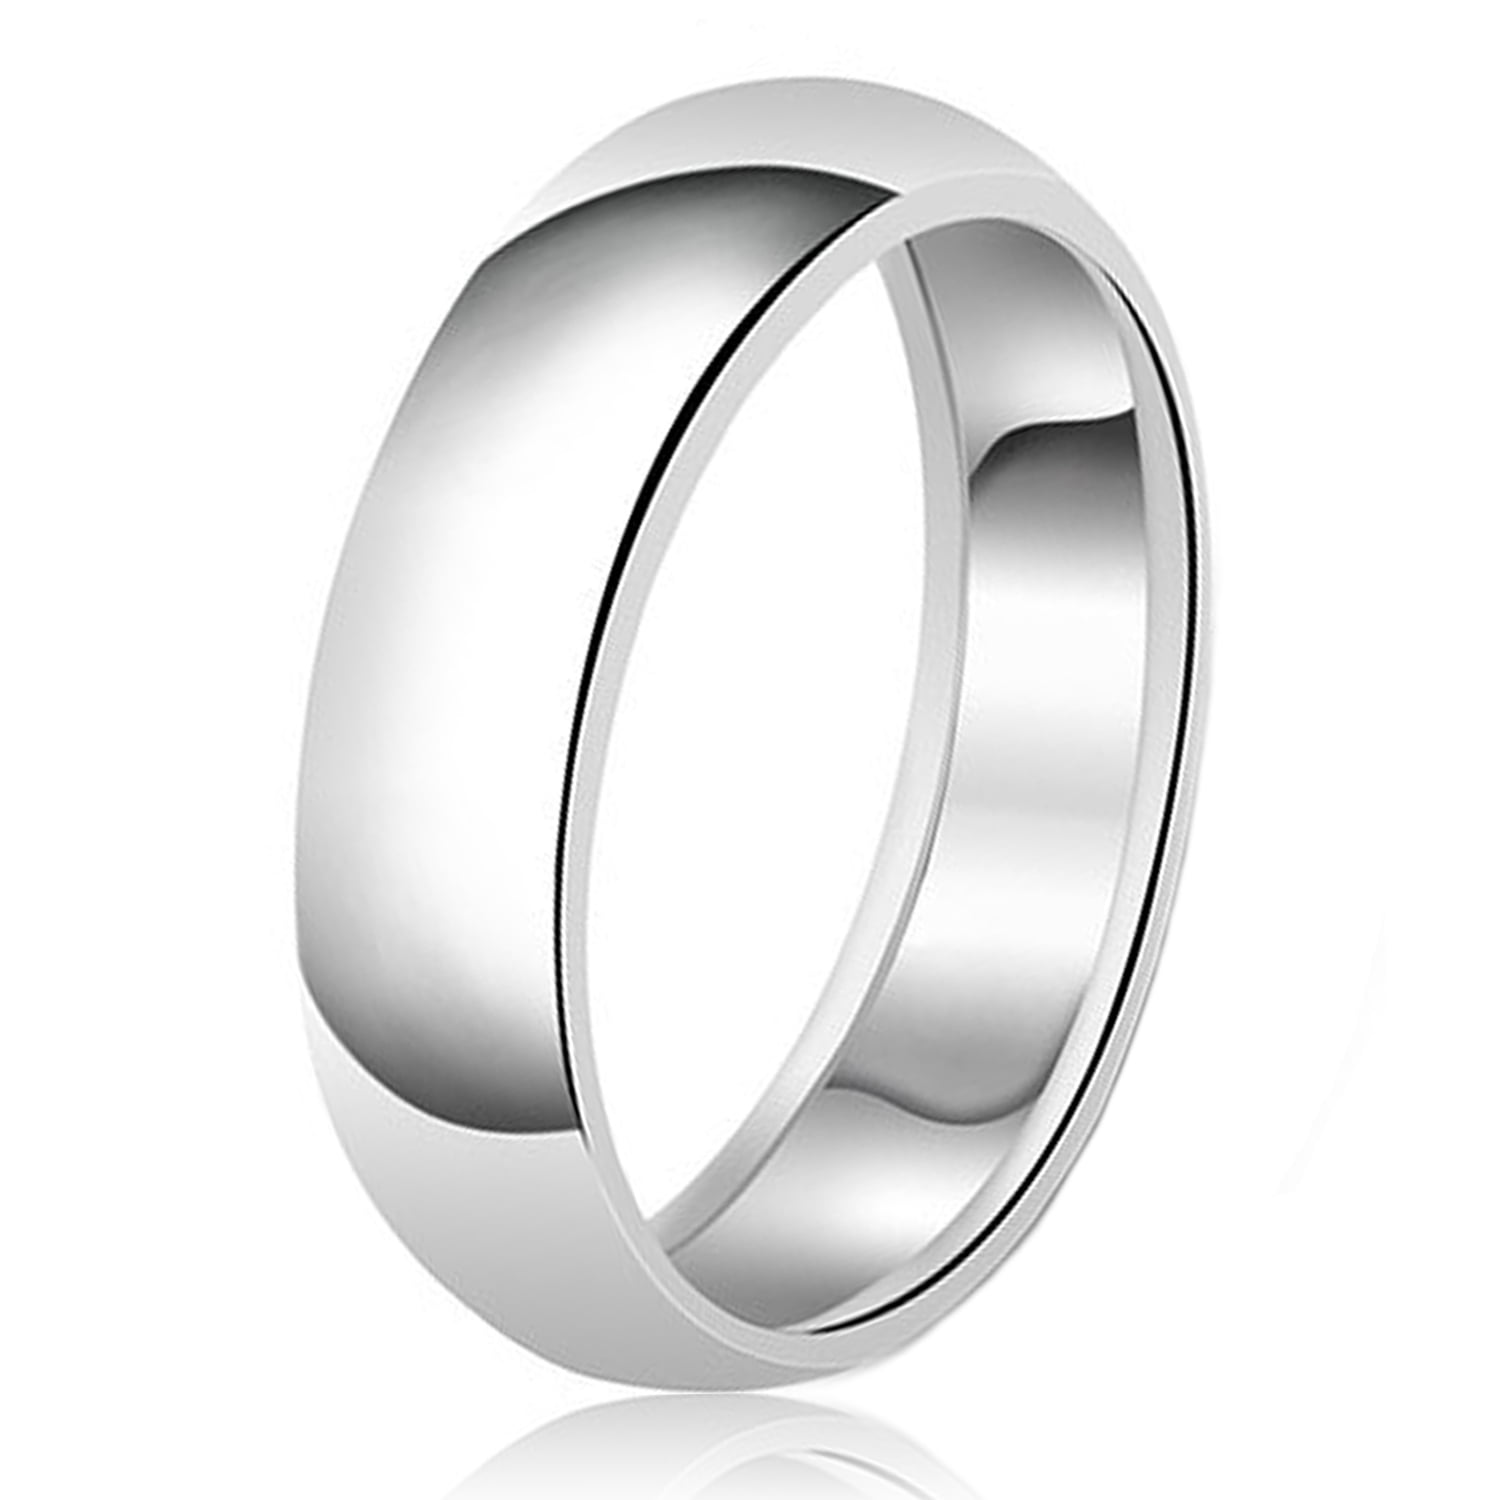 CloseoutWarehouse Sterling Silver Plain WeddingBand Ring